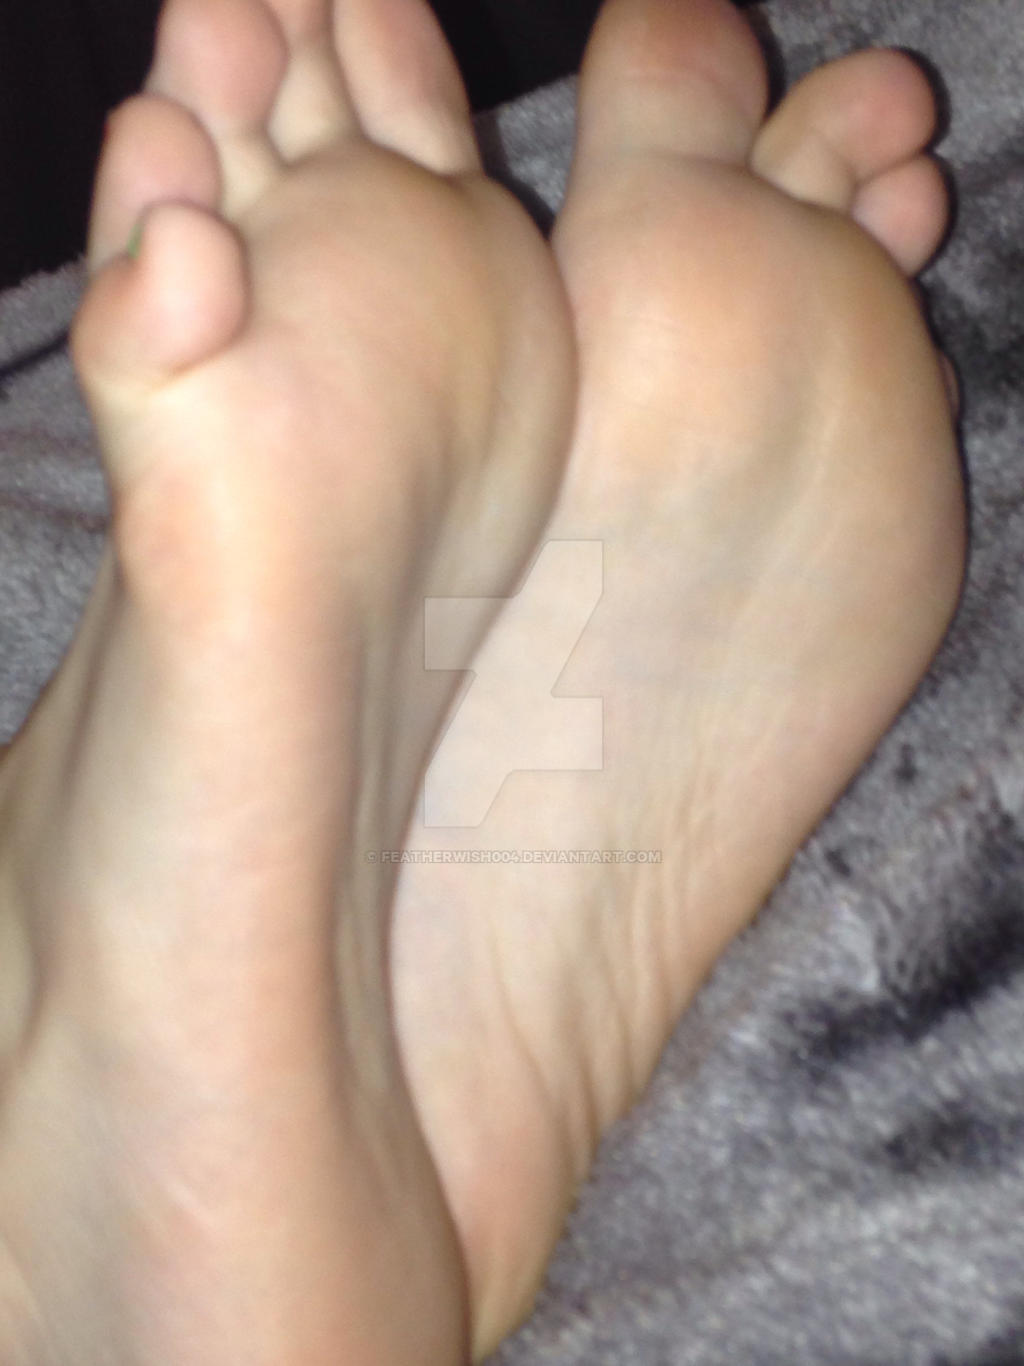 Both my ticklsih feet XD